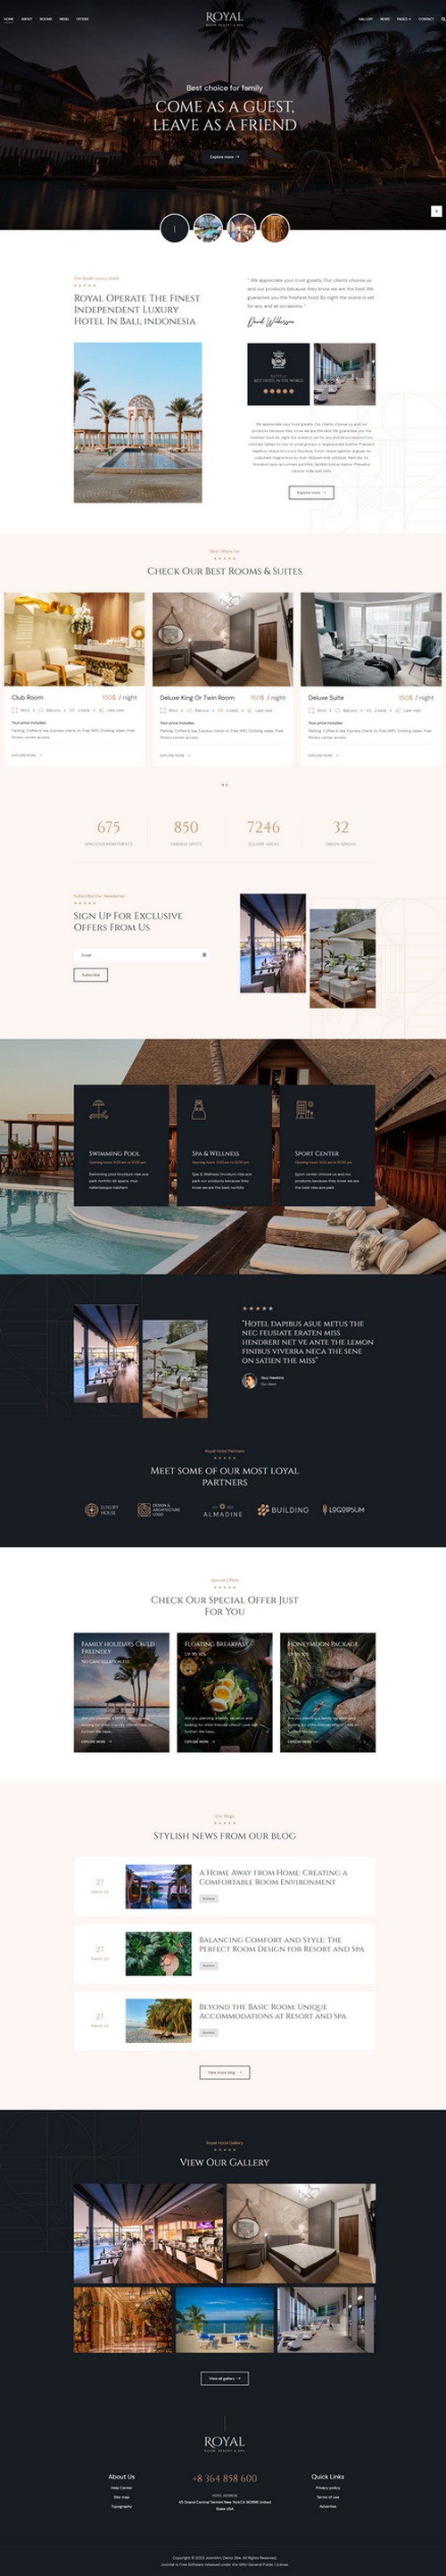 Royal - Ultimate Joomla Template for Hotel & Resorts